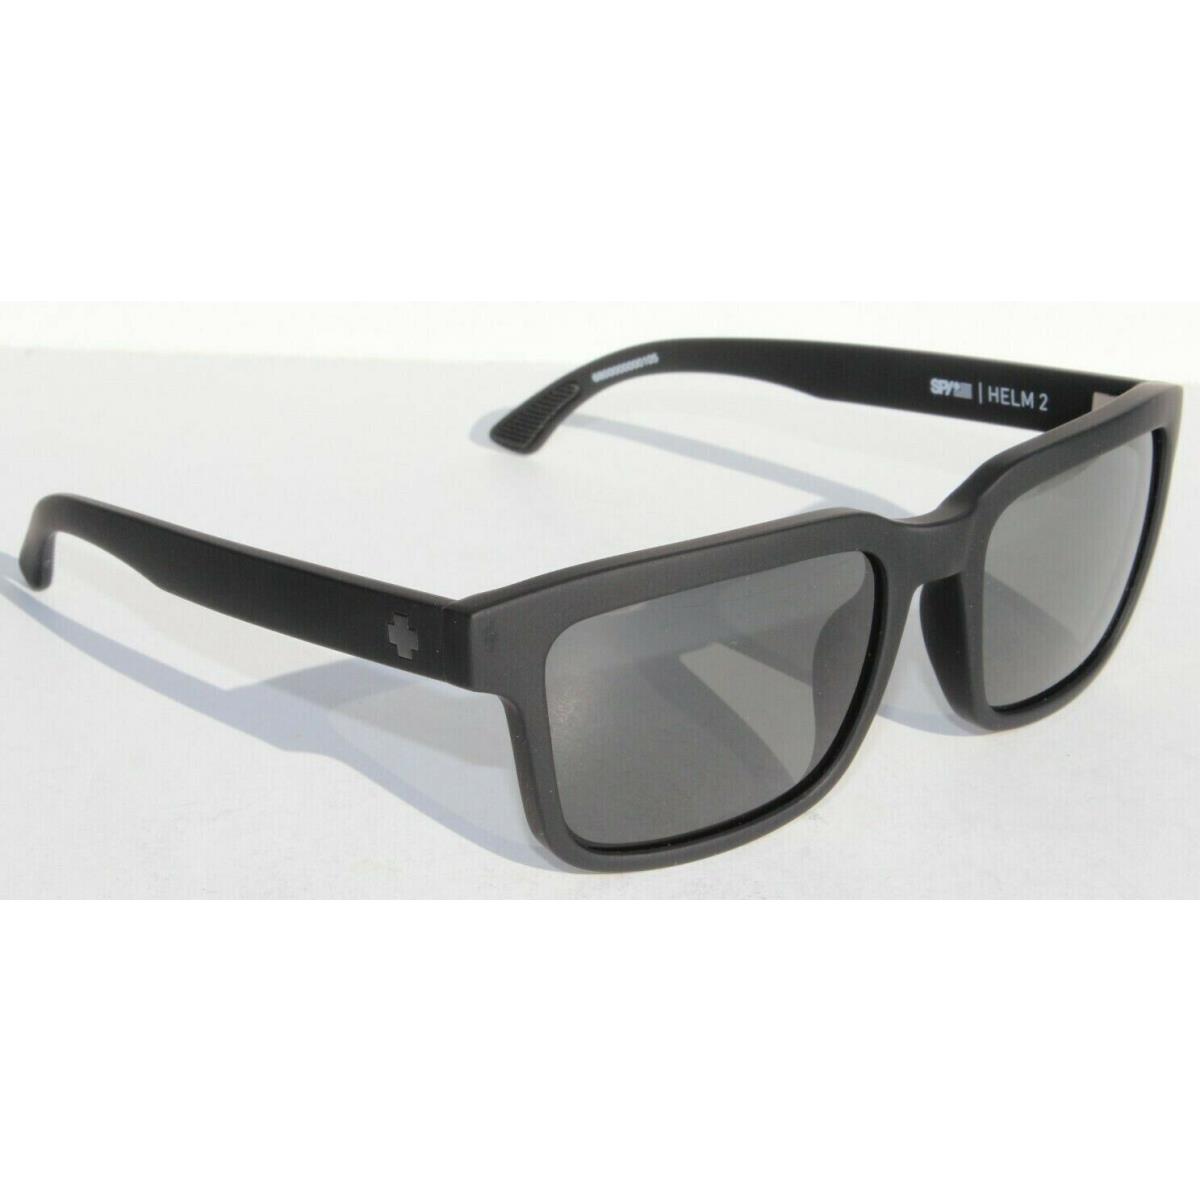 SPY Optics sunglasses Helm - Black Frame, Black Lens 2